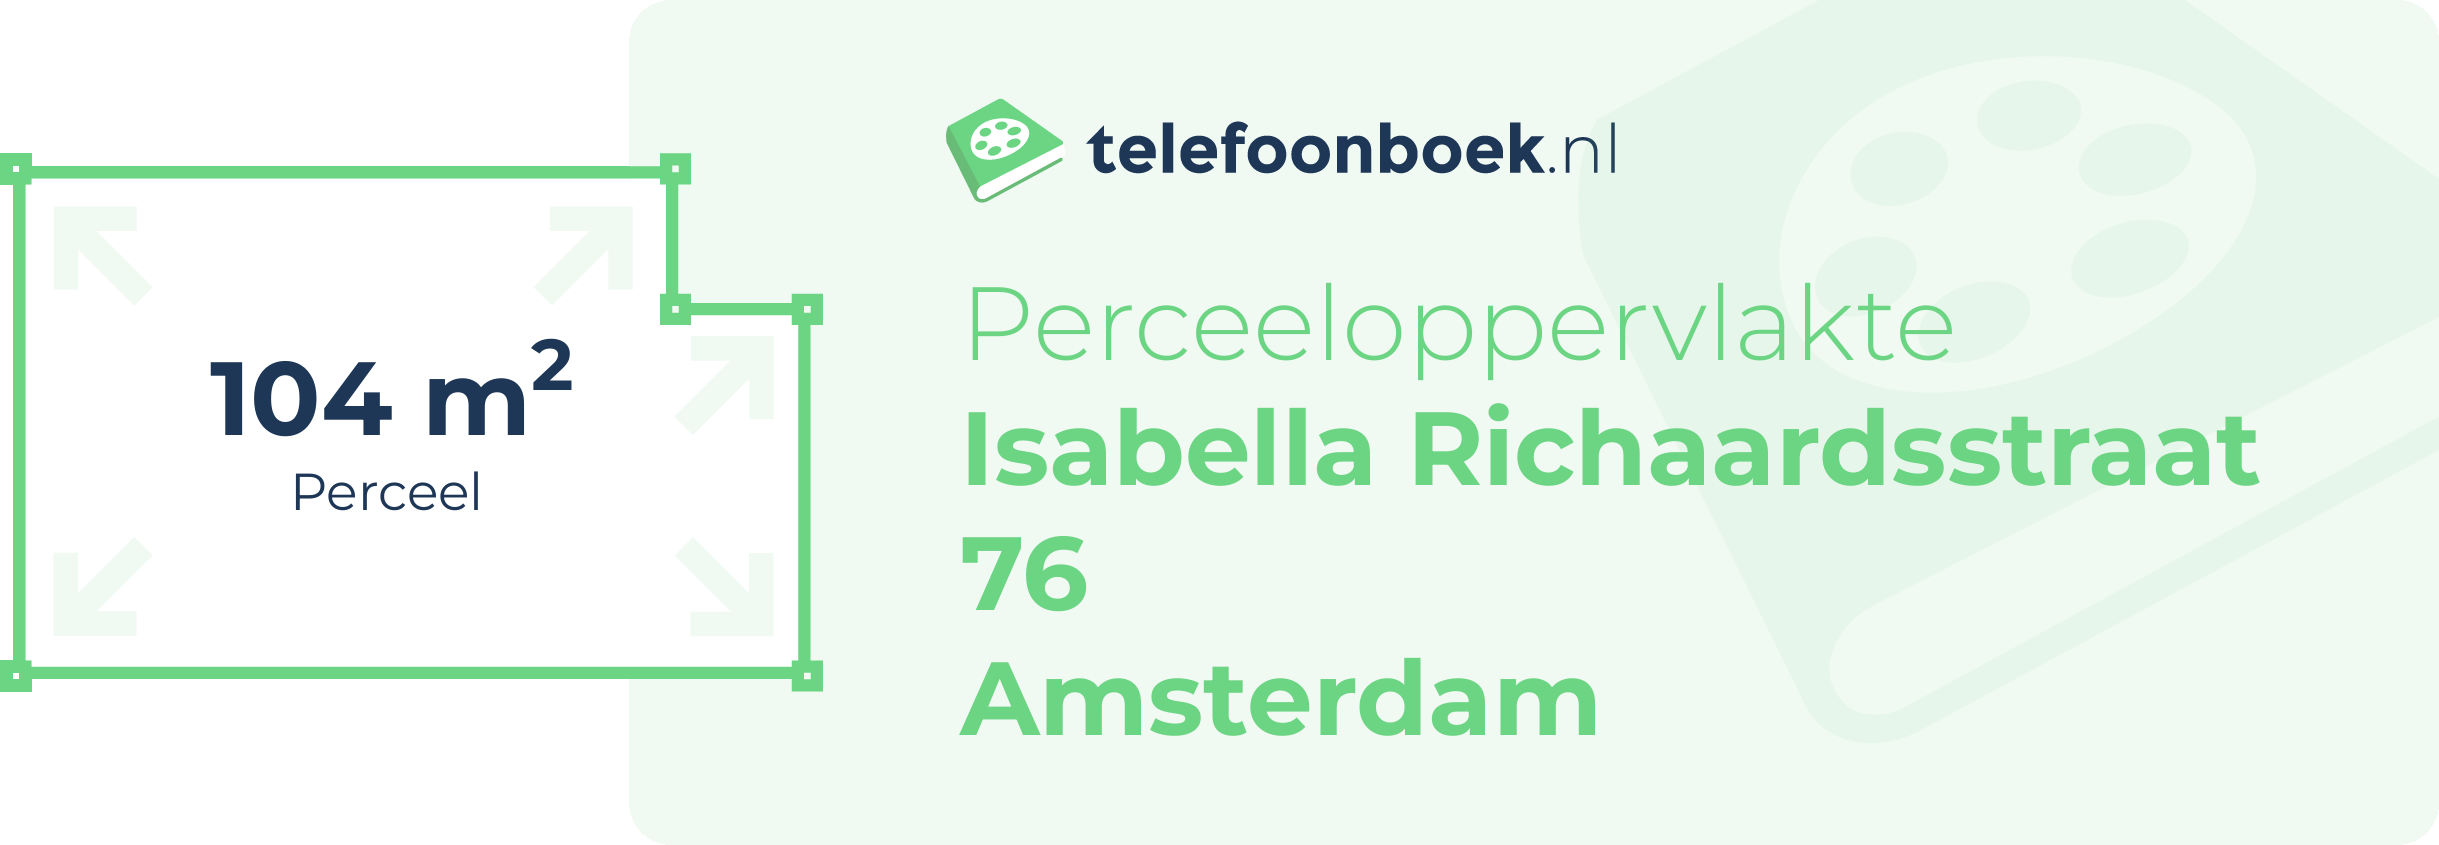 Perceeloppervlakte Isabella Richaardsstraat 76 Amsterdam